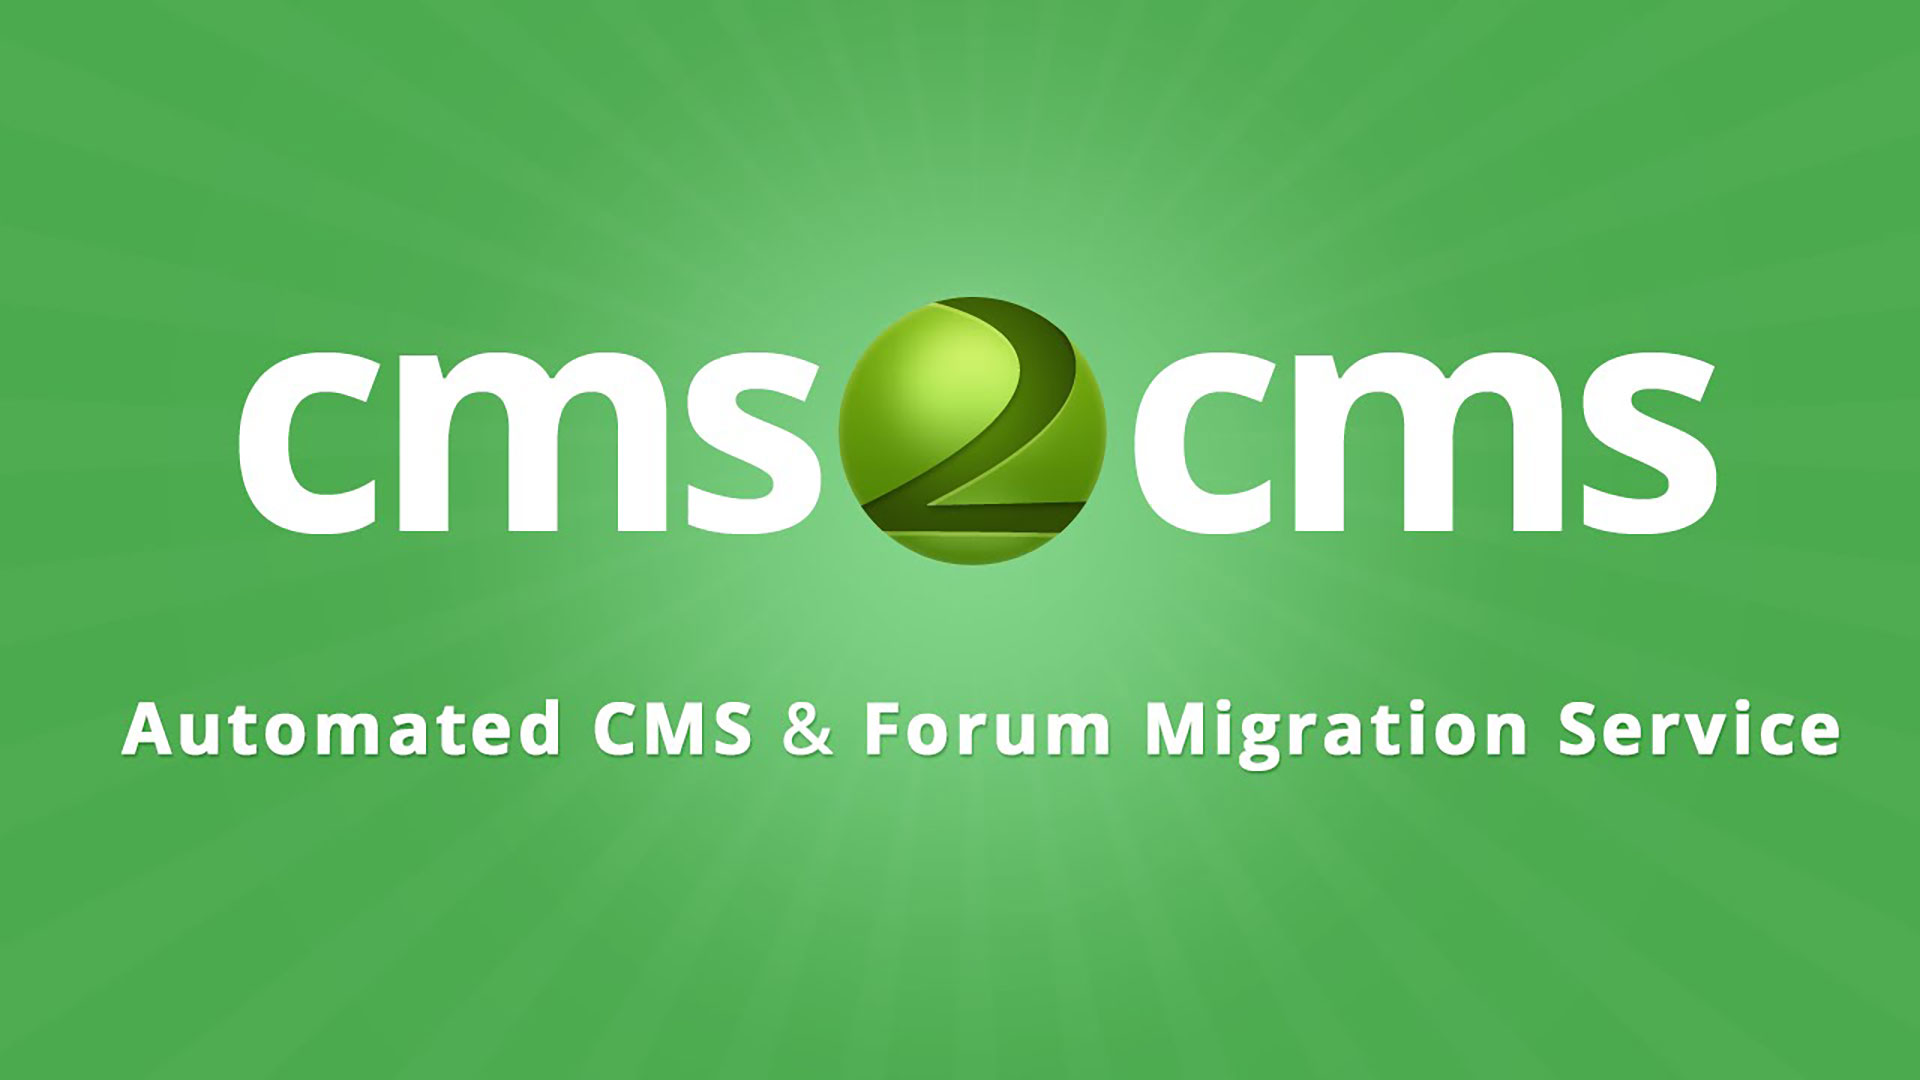 Cms2cms Website Migration Service Entrepreneur Decision Maker Connector Podcaster Educator